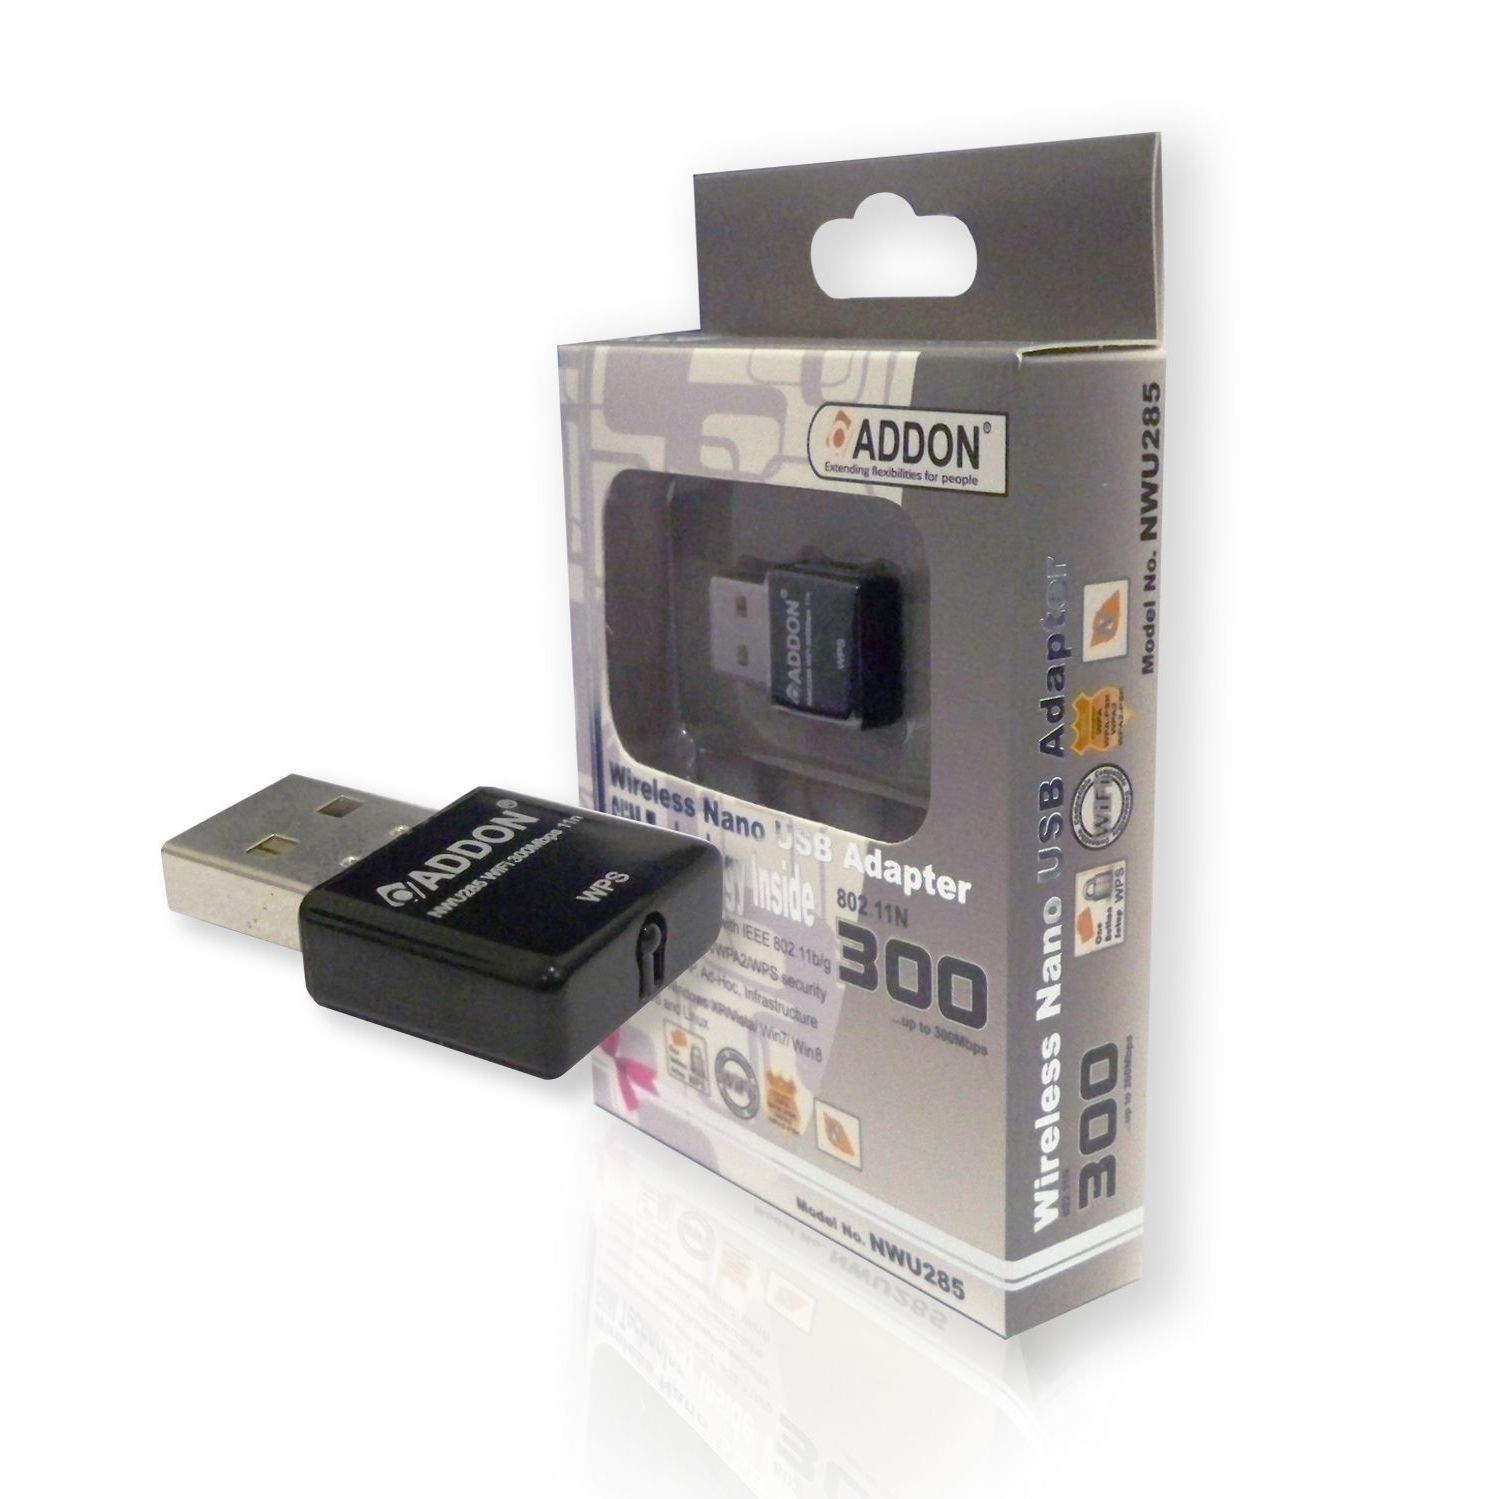 Addon - ADDON Wireless 300Mbps NANO USB Adapter (NWU285v3)